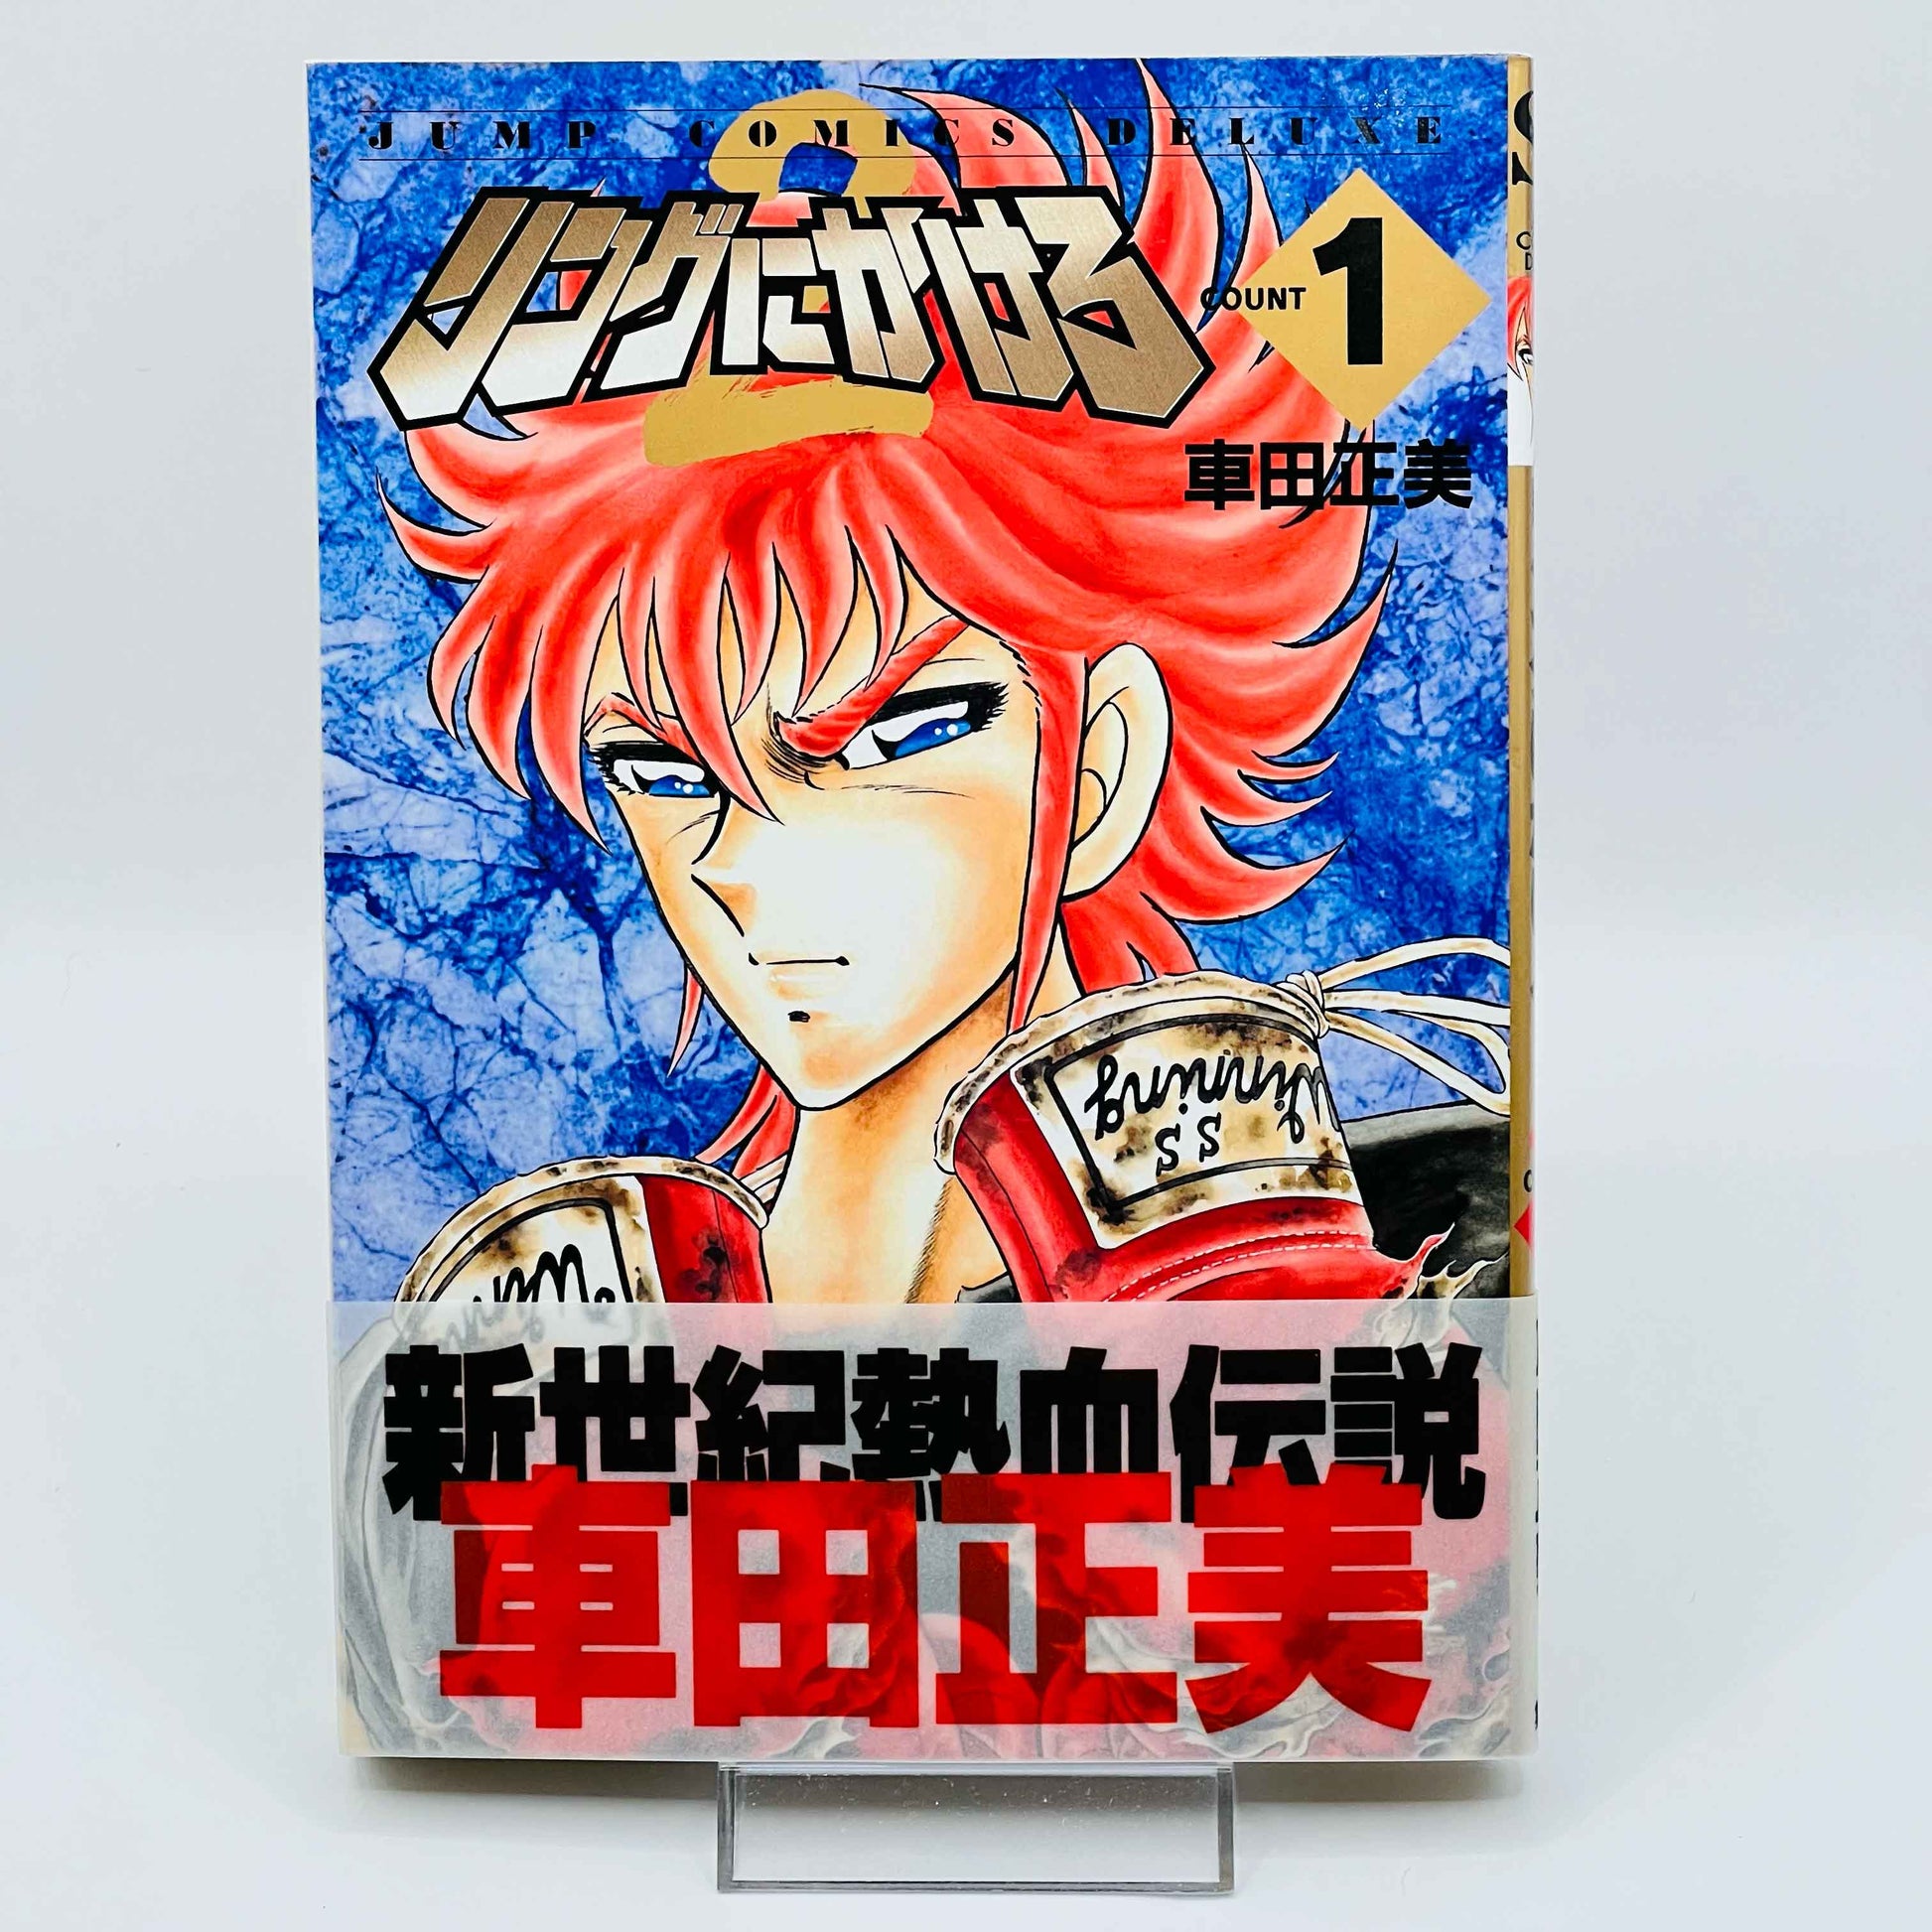 Ring ni Kakero 2 - Volume 01 /w Obi - 1stPrint.net - 1st First Print Edition Manga Store - M-RNK2-01-002